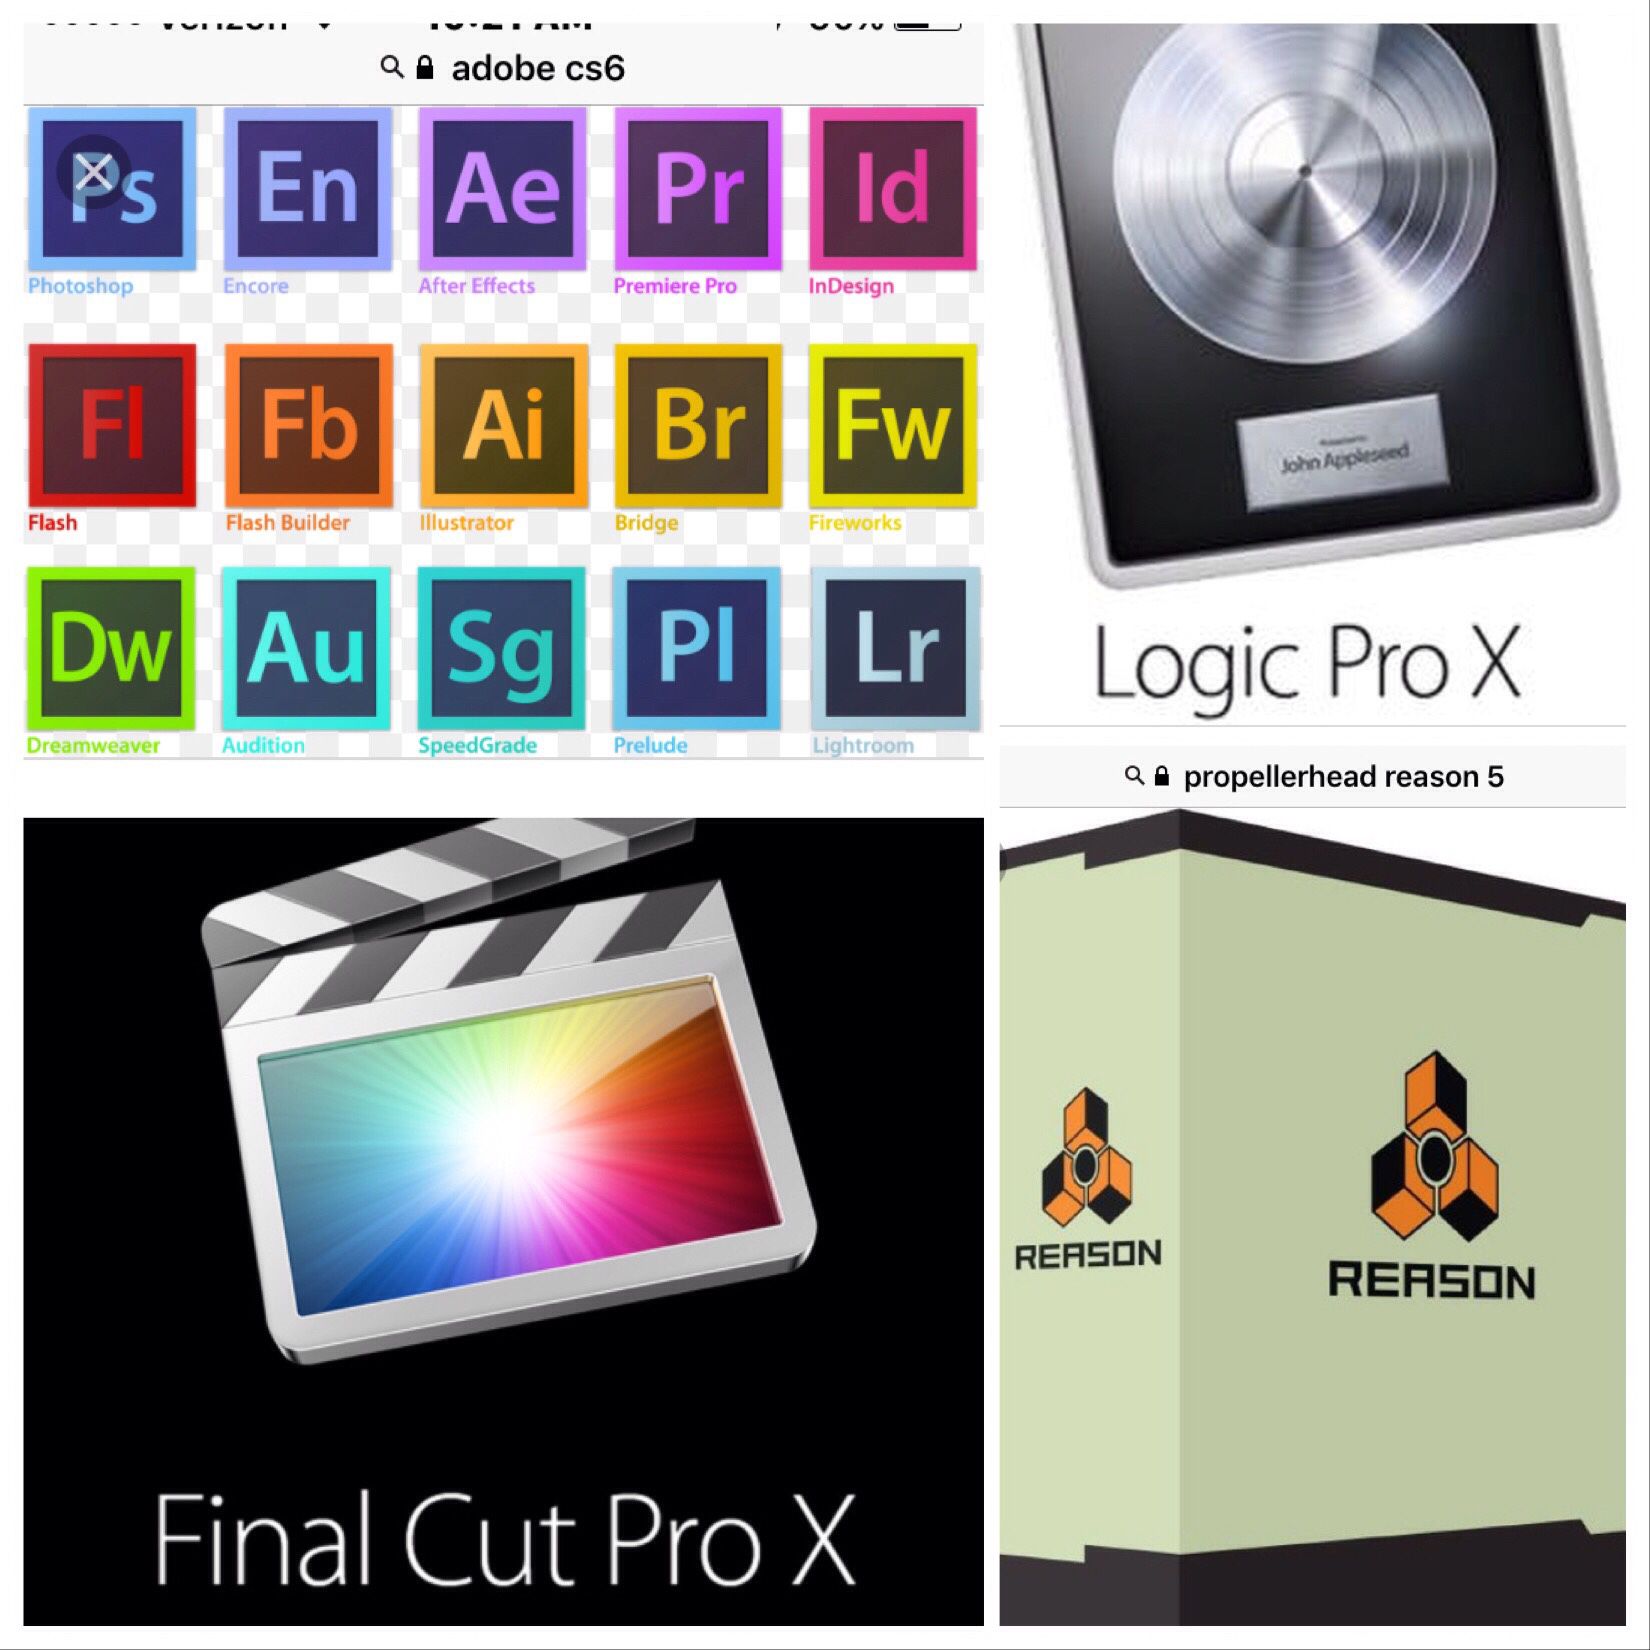 Adobe CS6 Master collection, Reason 5, for Mac/PC, Final Cut X, Logic Pro X 10.2, for Mac & more